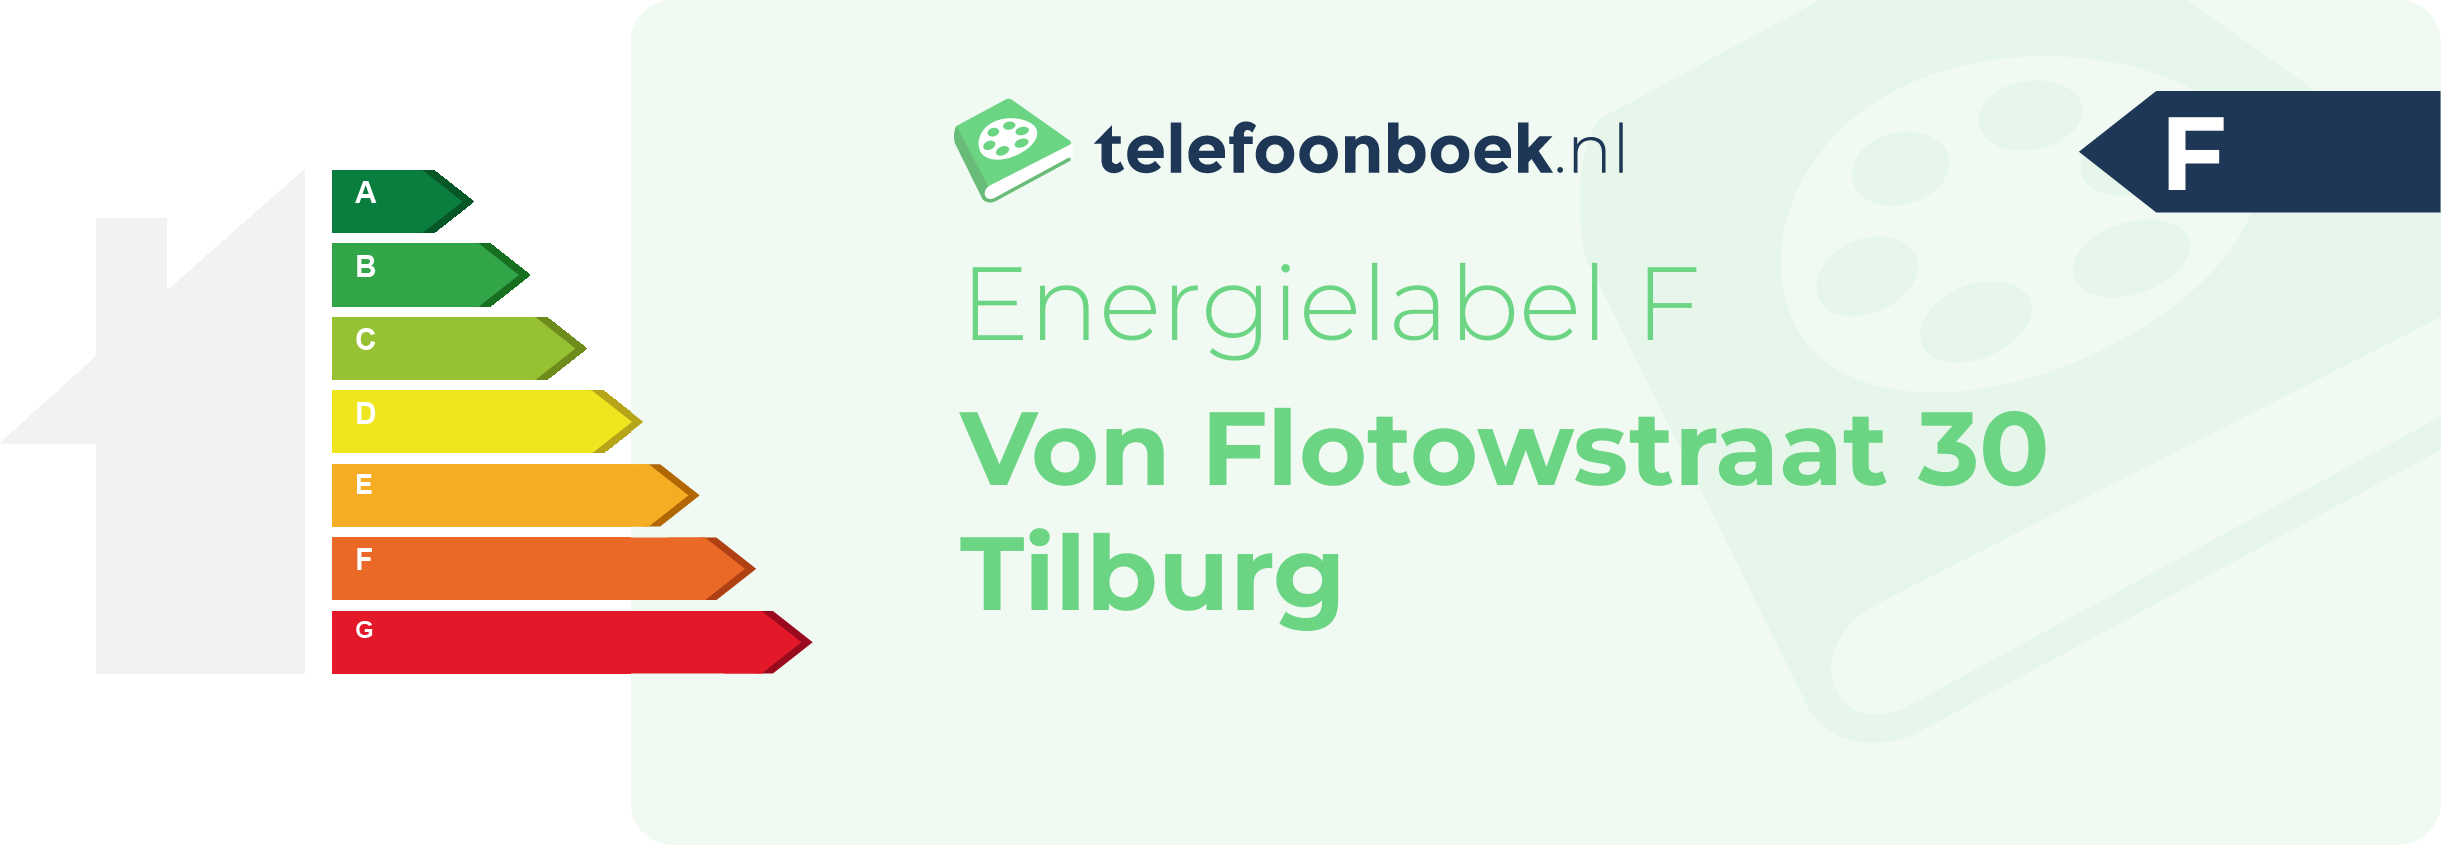 Energielabel Von Flotowstraat 30 Tilburg